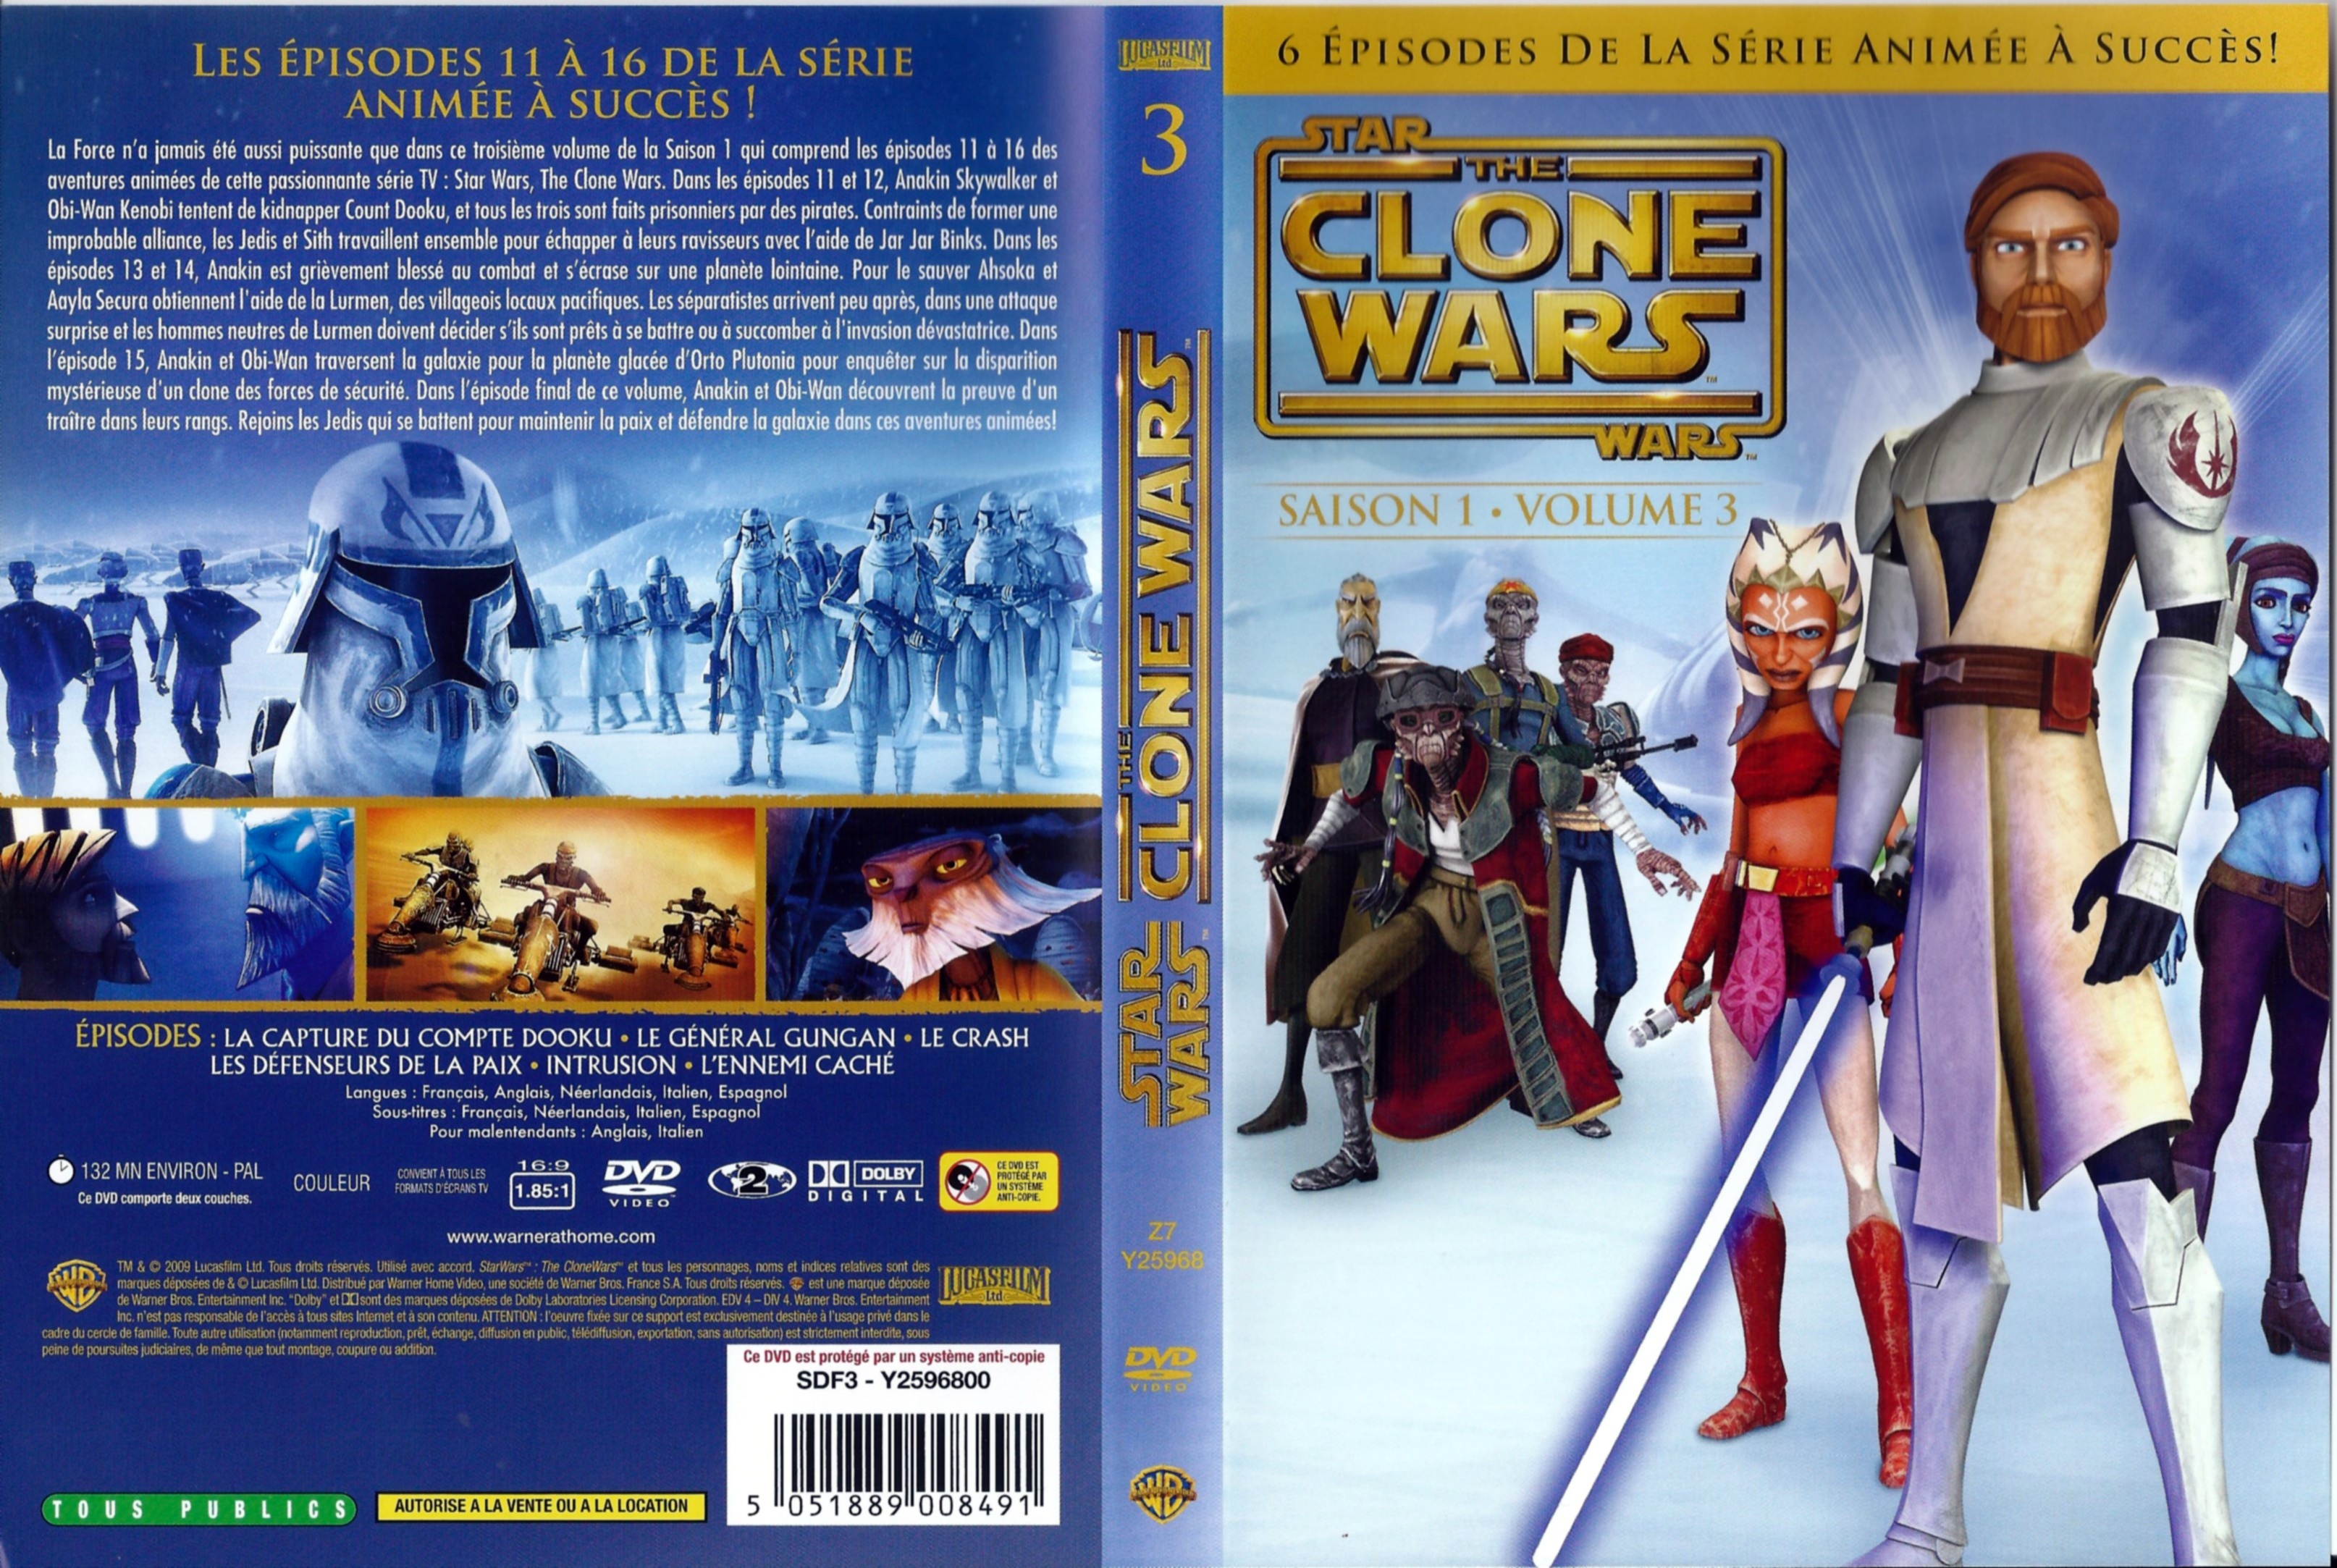 Jaquette DVD Star Wars The Clone Wars Saison 1 vol 03